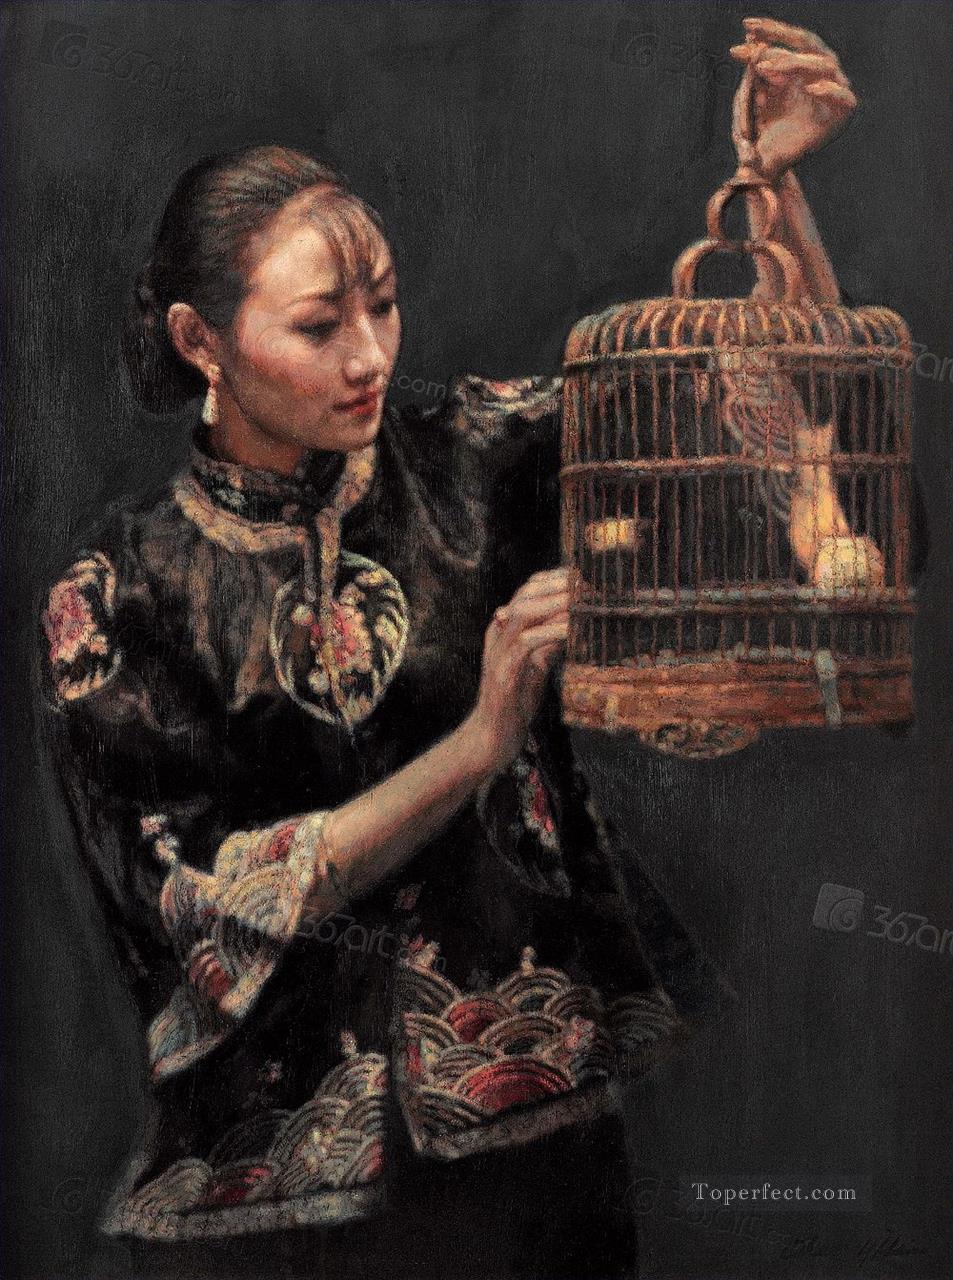 zg053cD131 中国の画家チェン・イーフェイ油絵